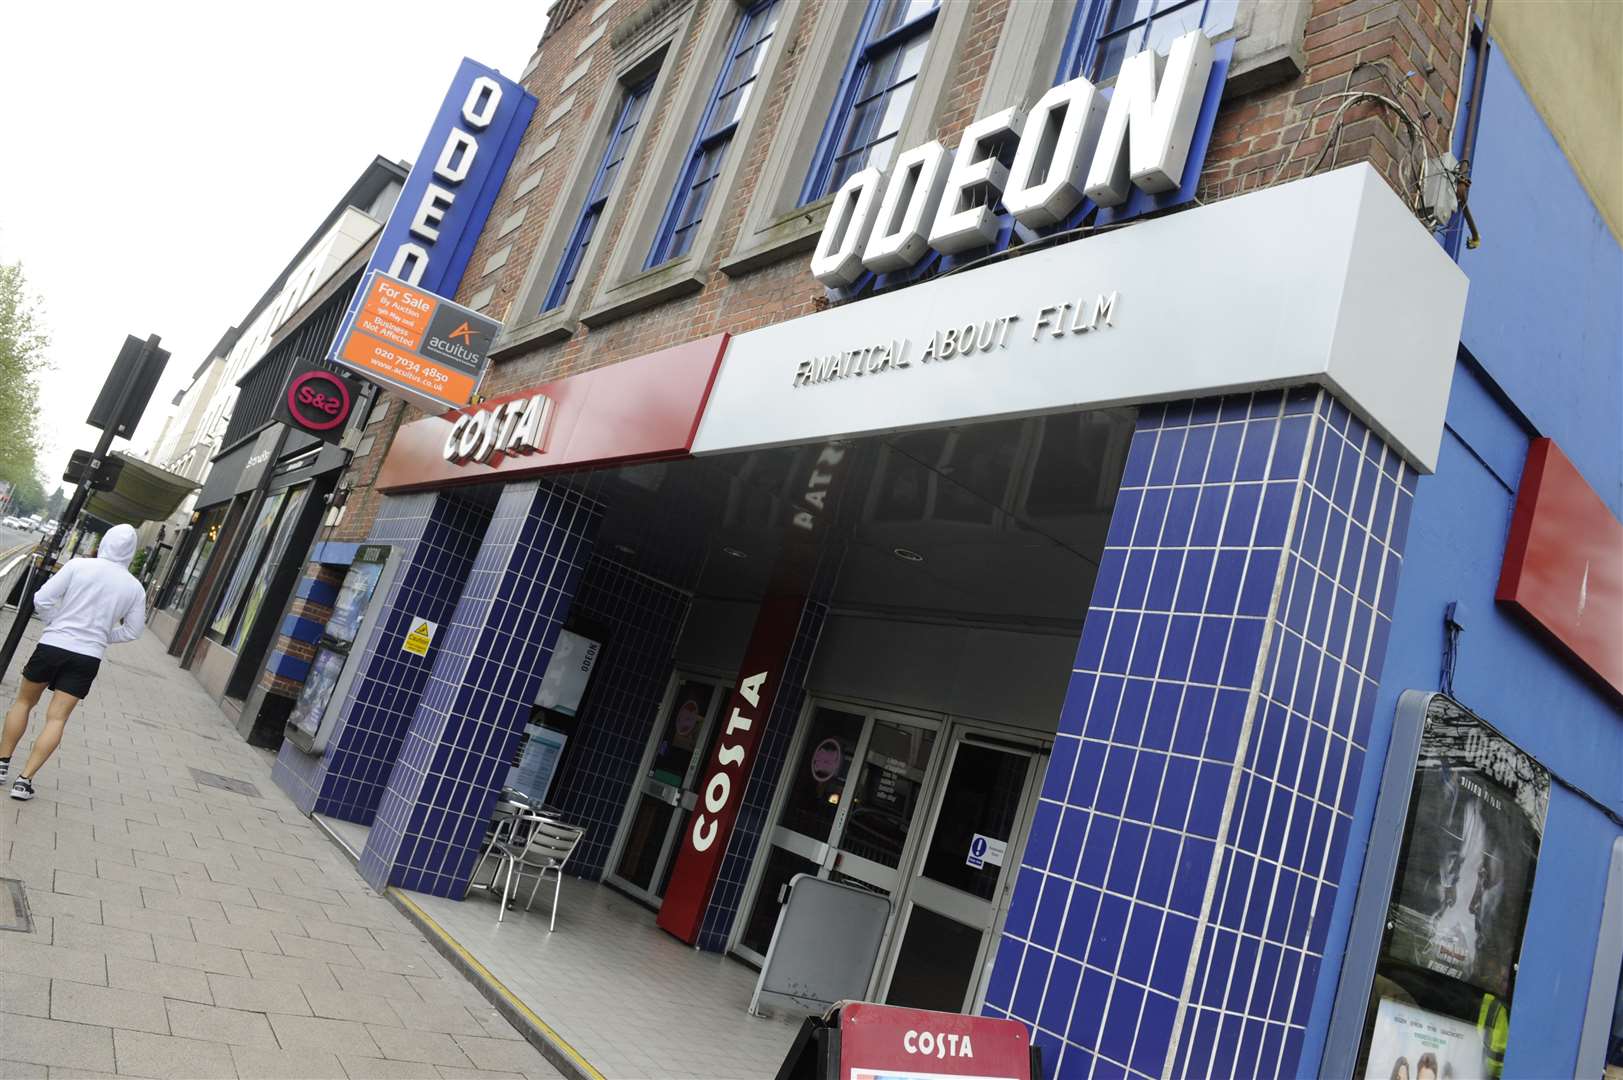 Odeon cinema in Canterbury